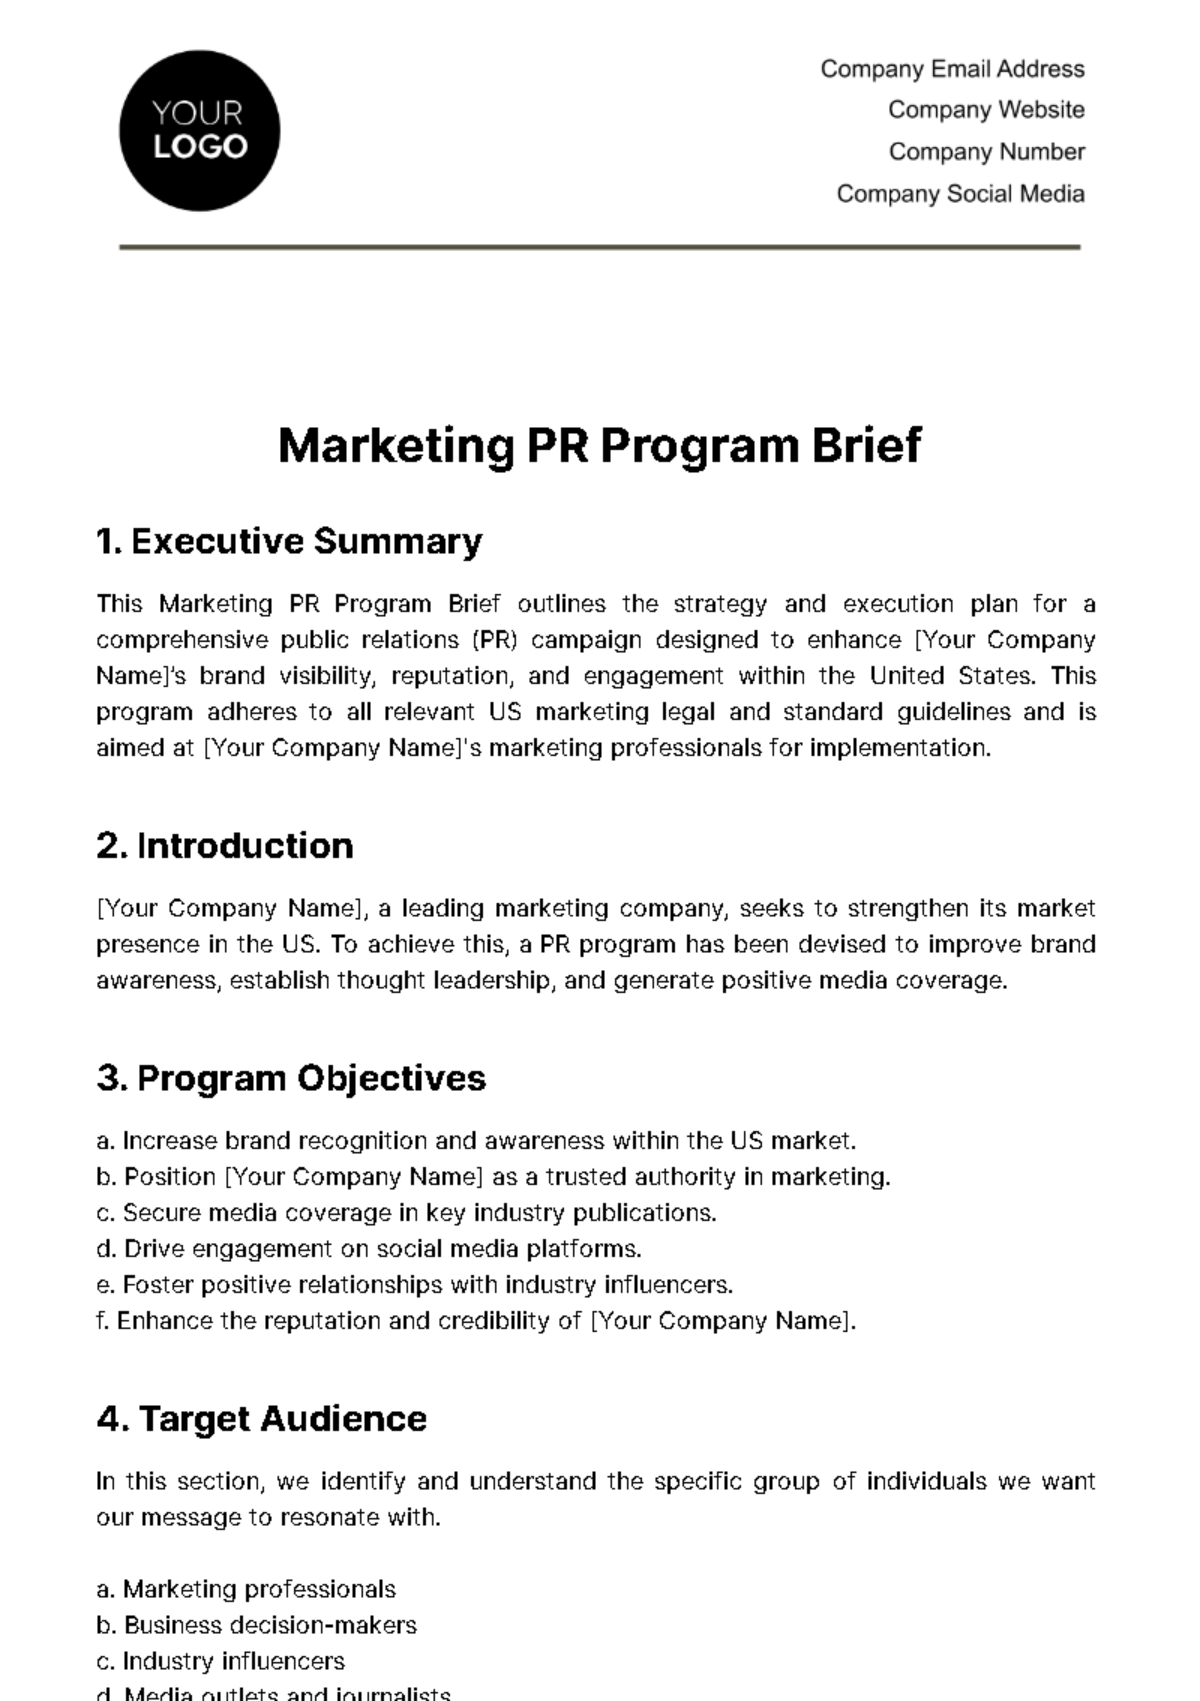 Marketing PR Program Brief Template